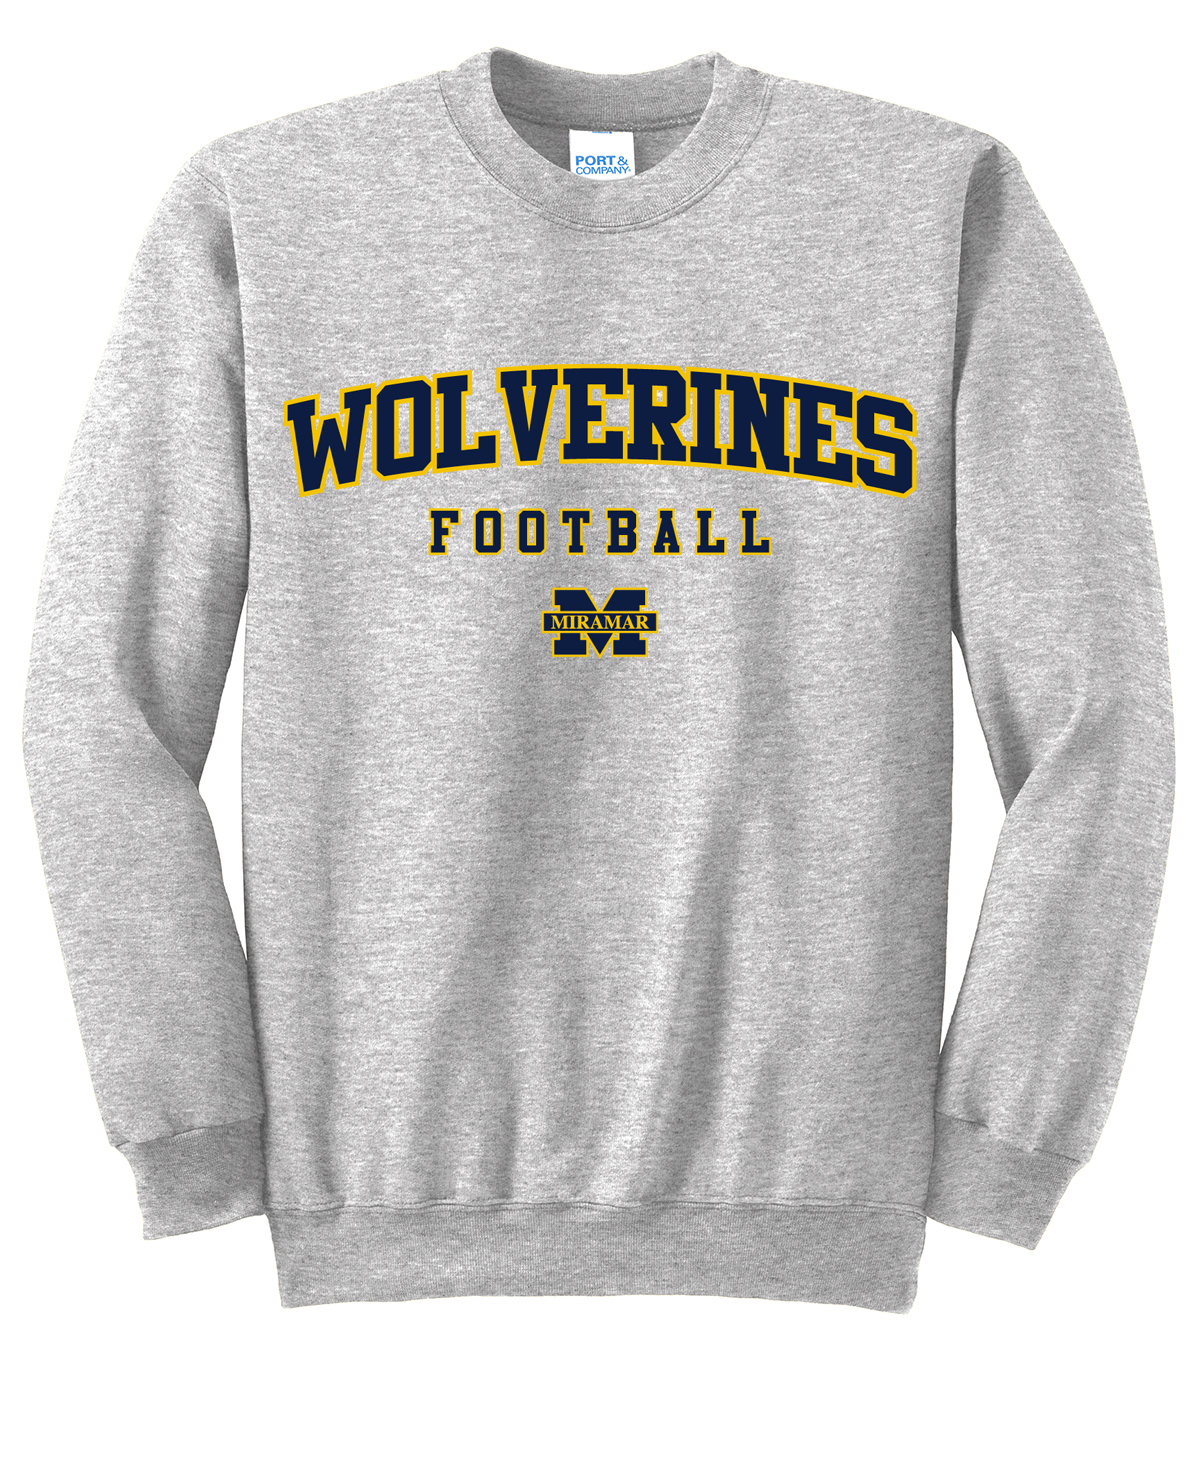 Miramar Wolverines Football Crew Neck Sweater